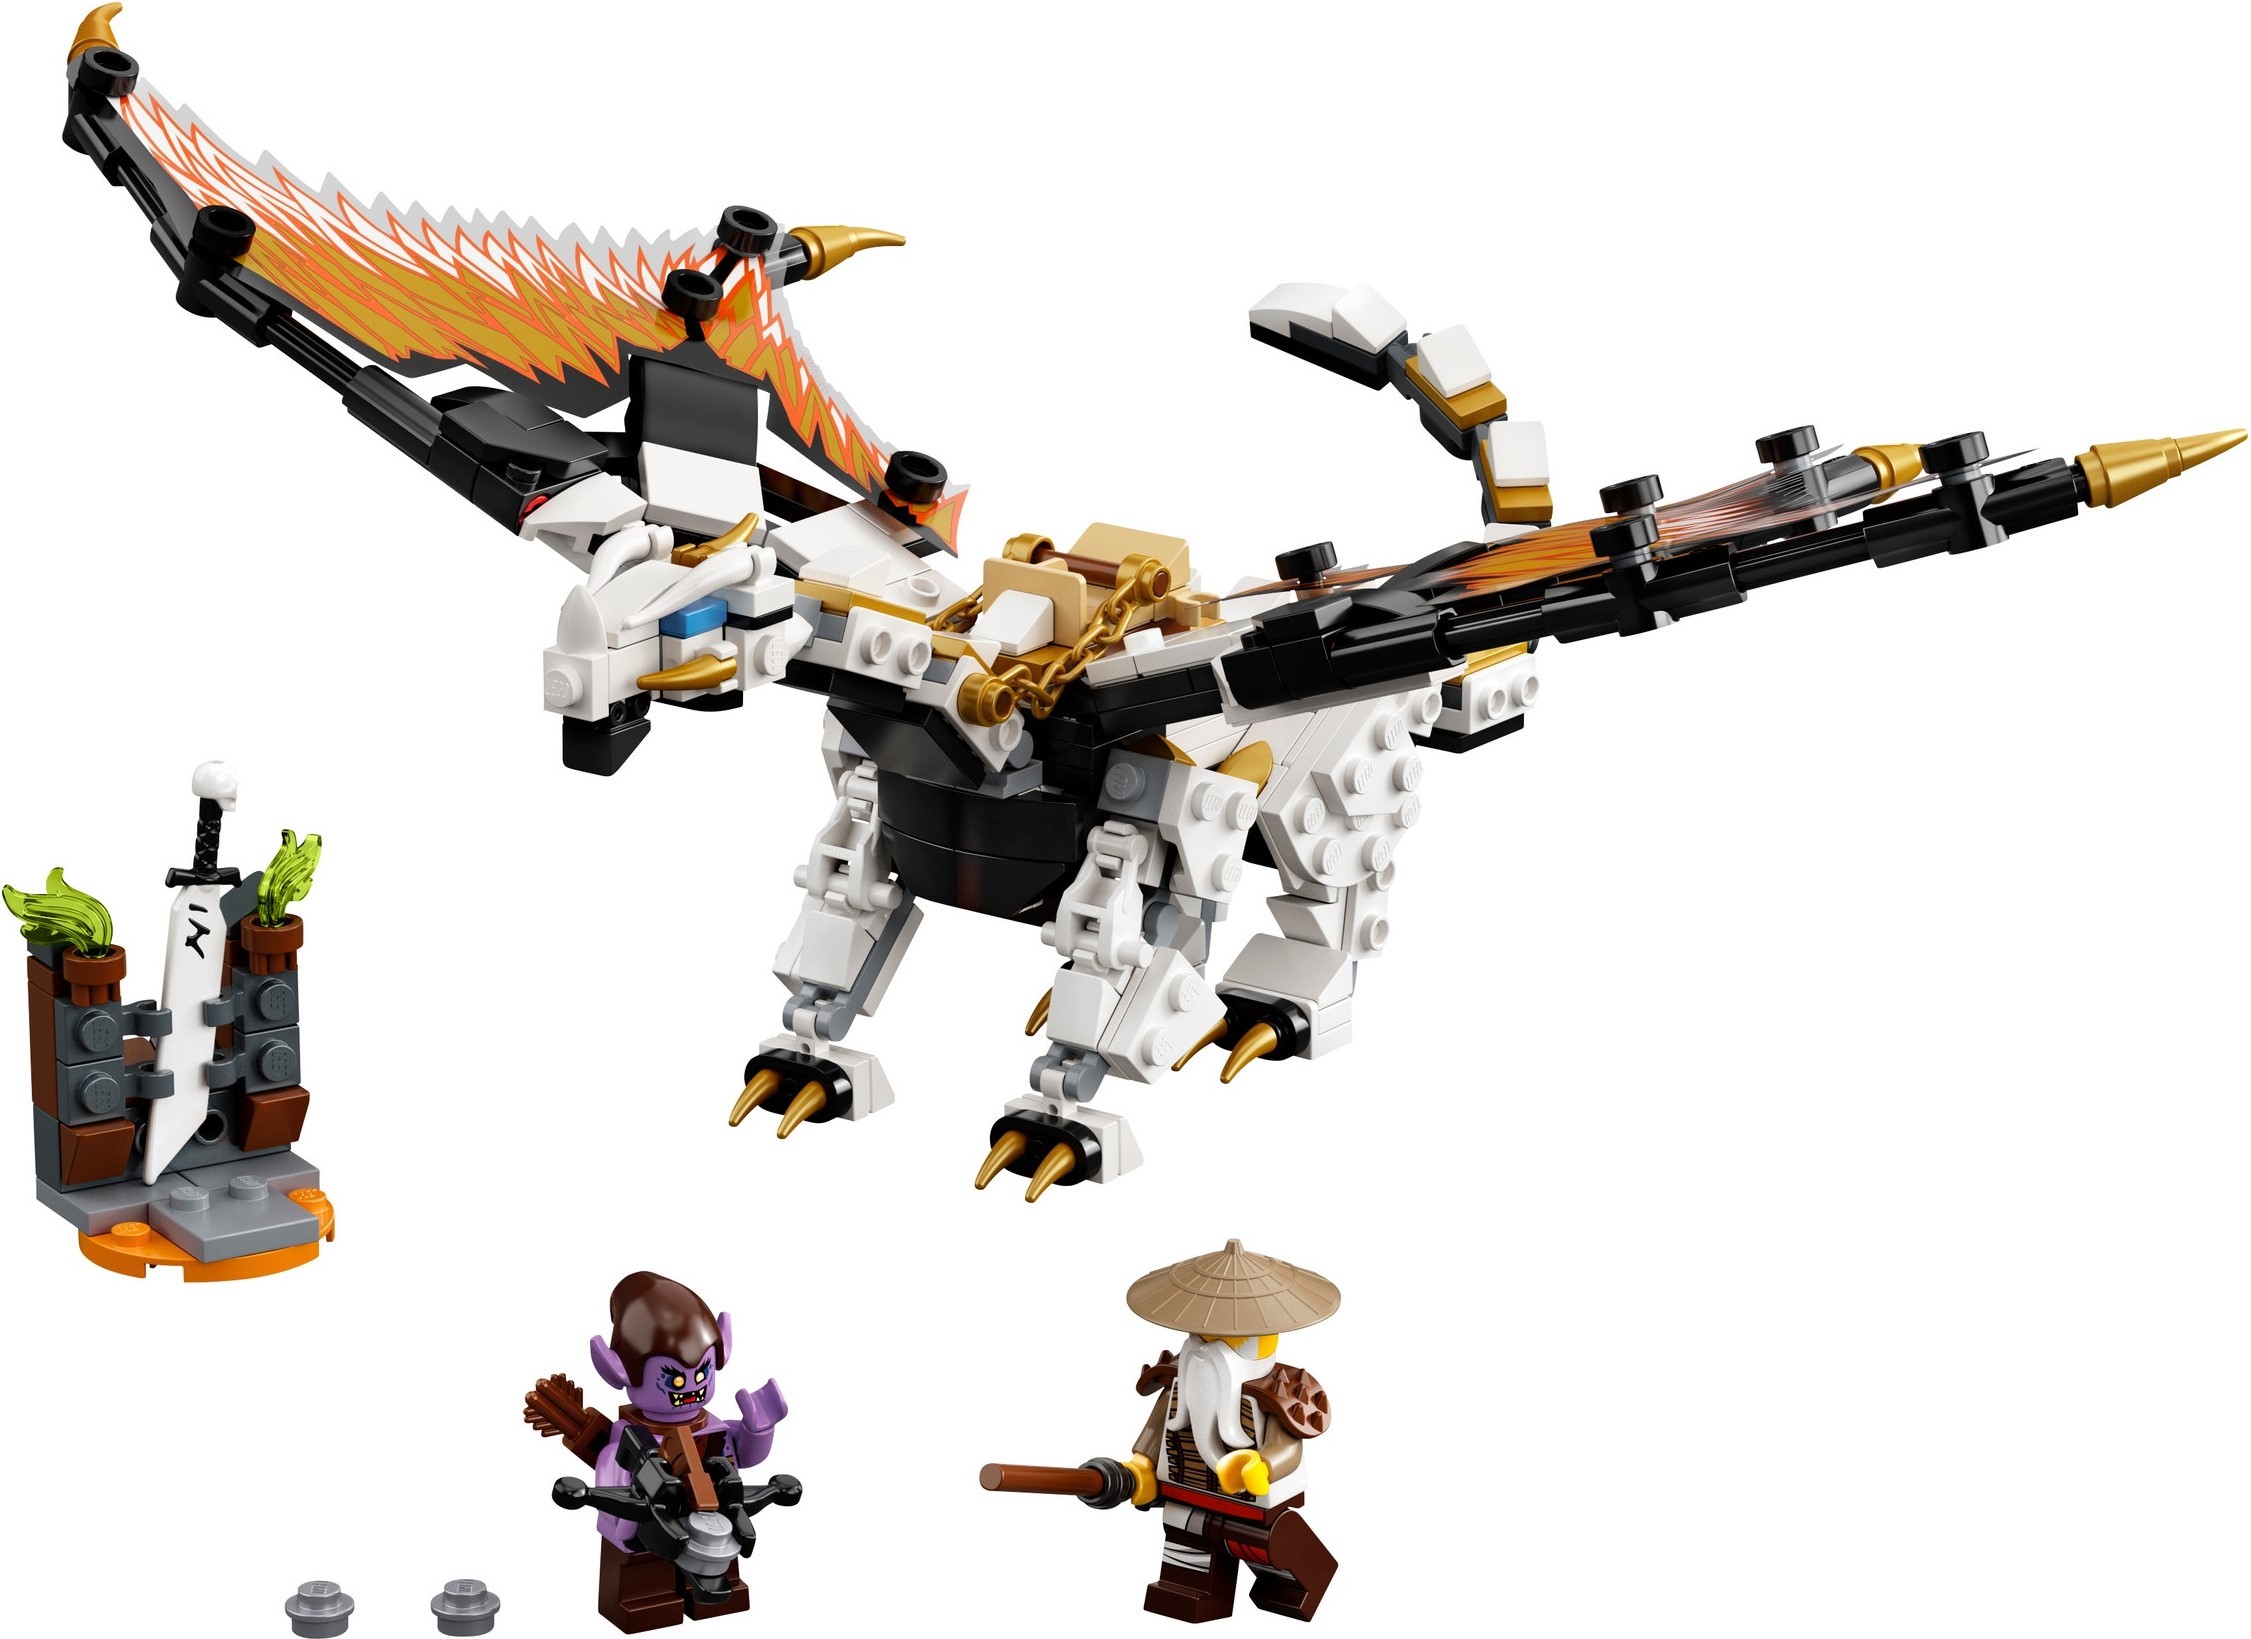 LEGO Ninjago Master of the Mountain - HelloBricks